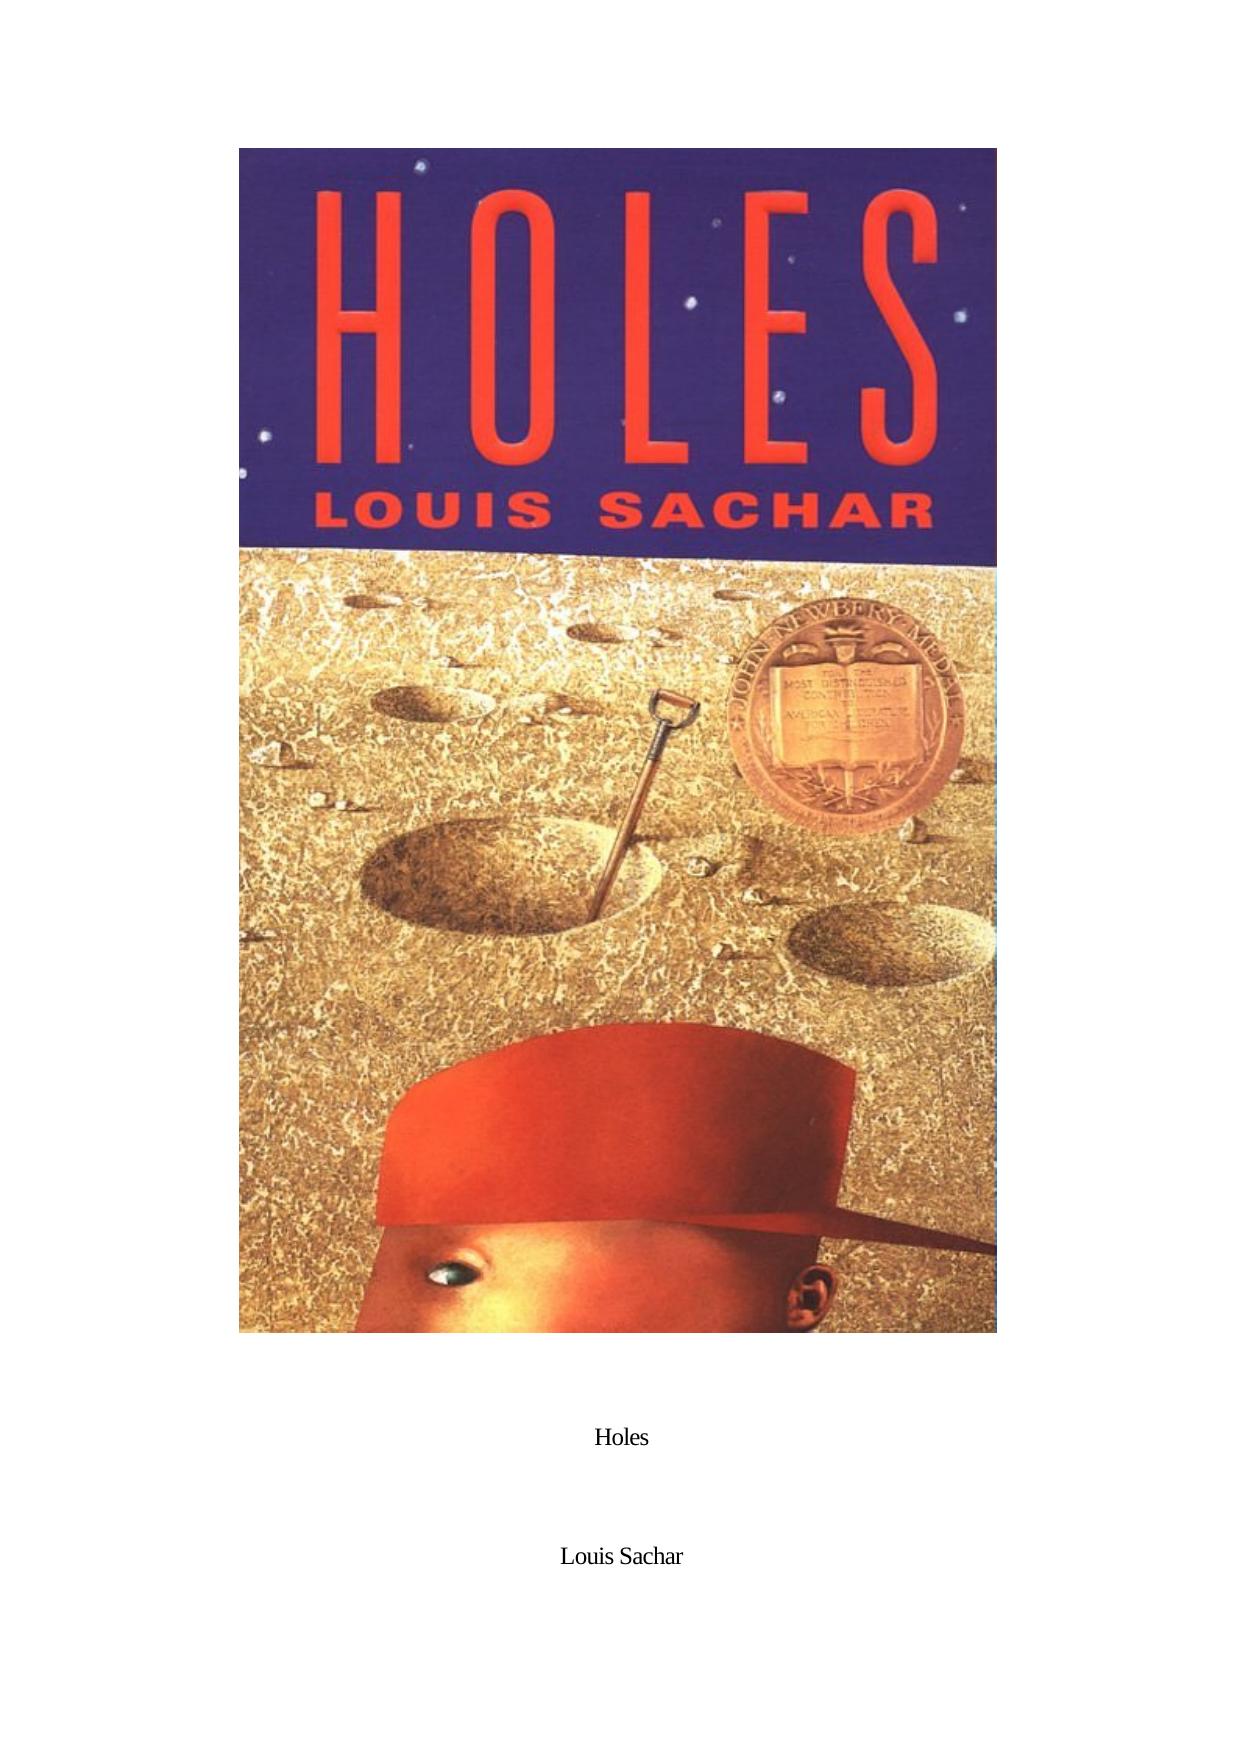 Holes louis sachar audiobook free download